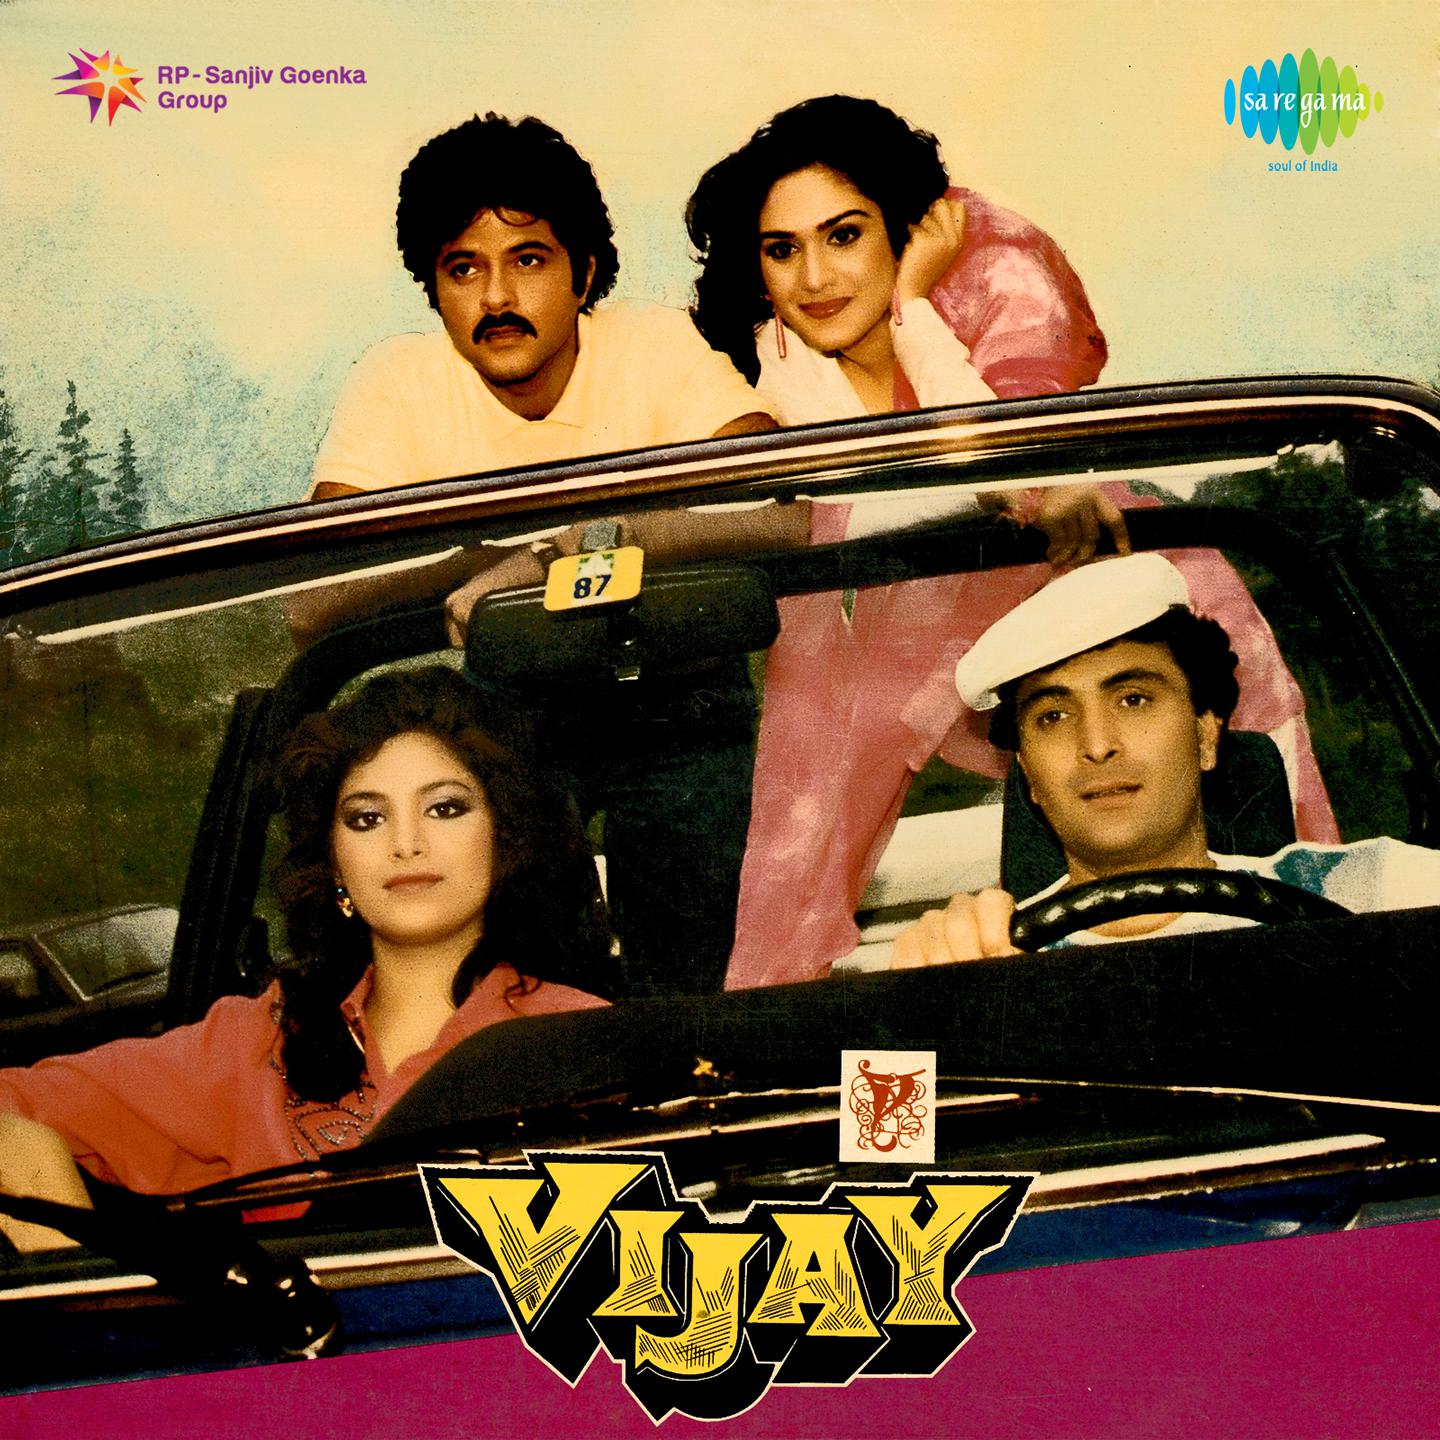 Vijay [Dialogue] - Keya Chahate Ho Tum Log